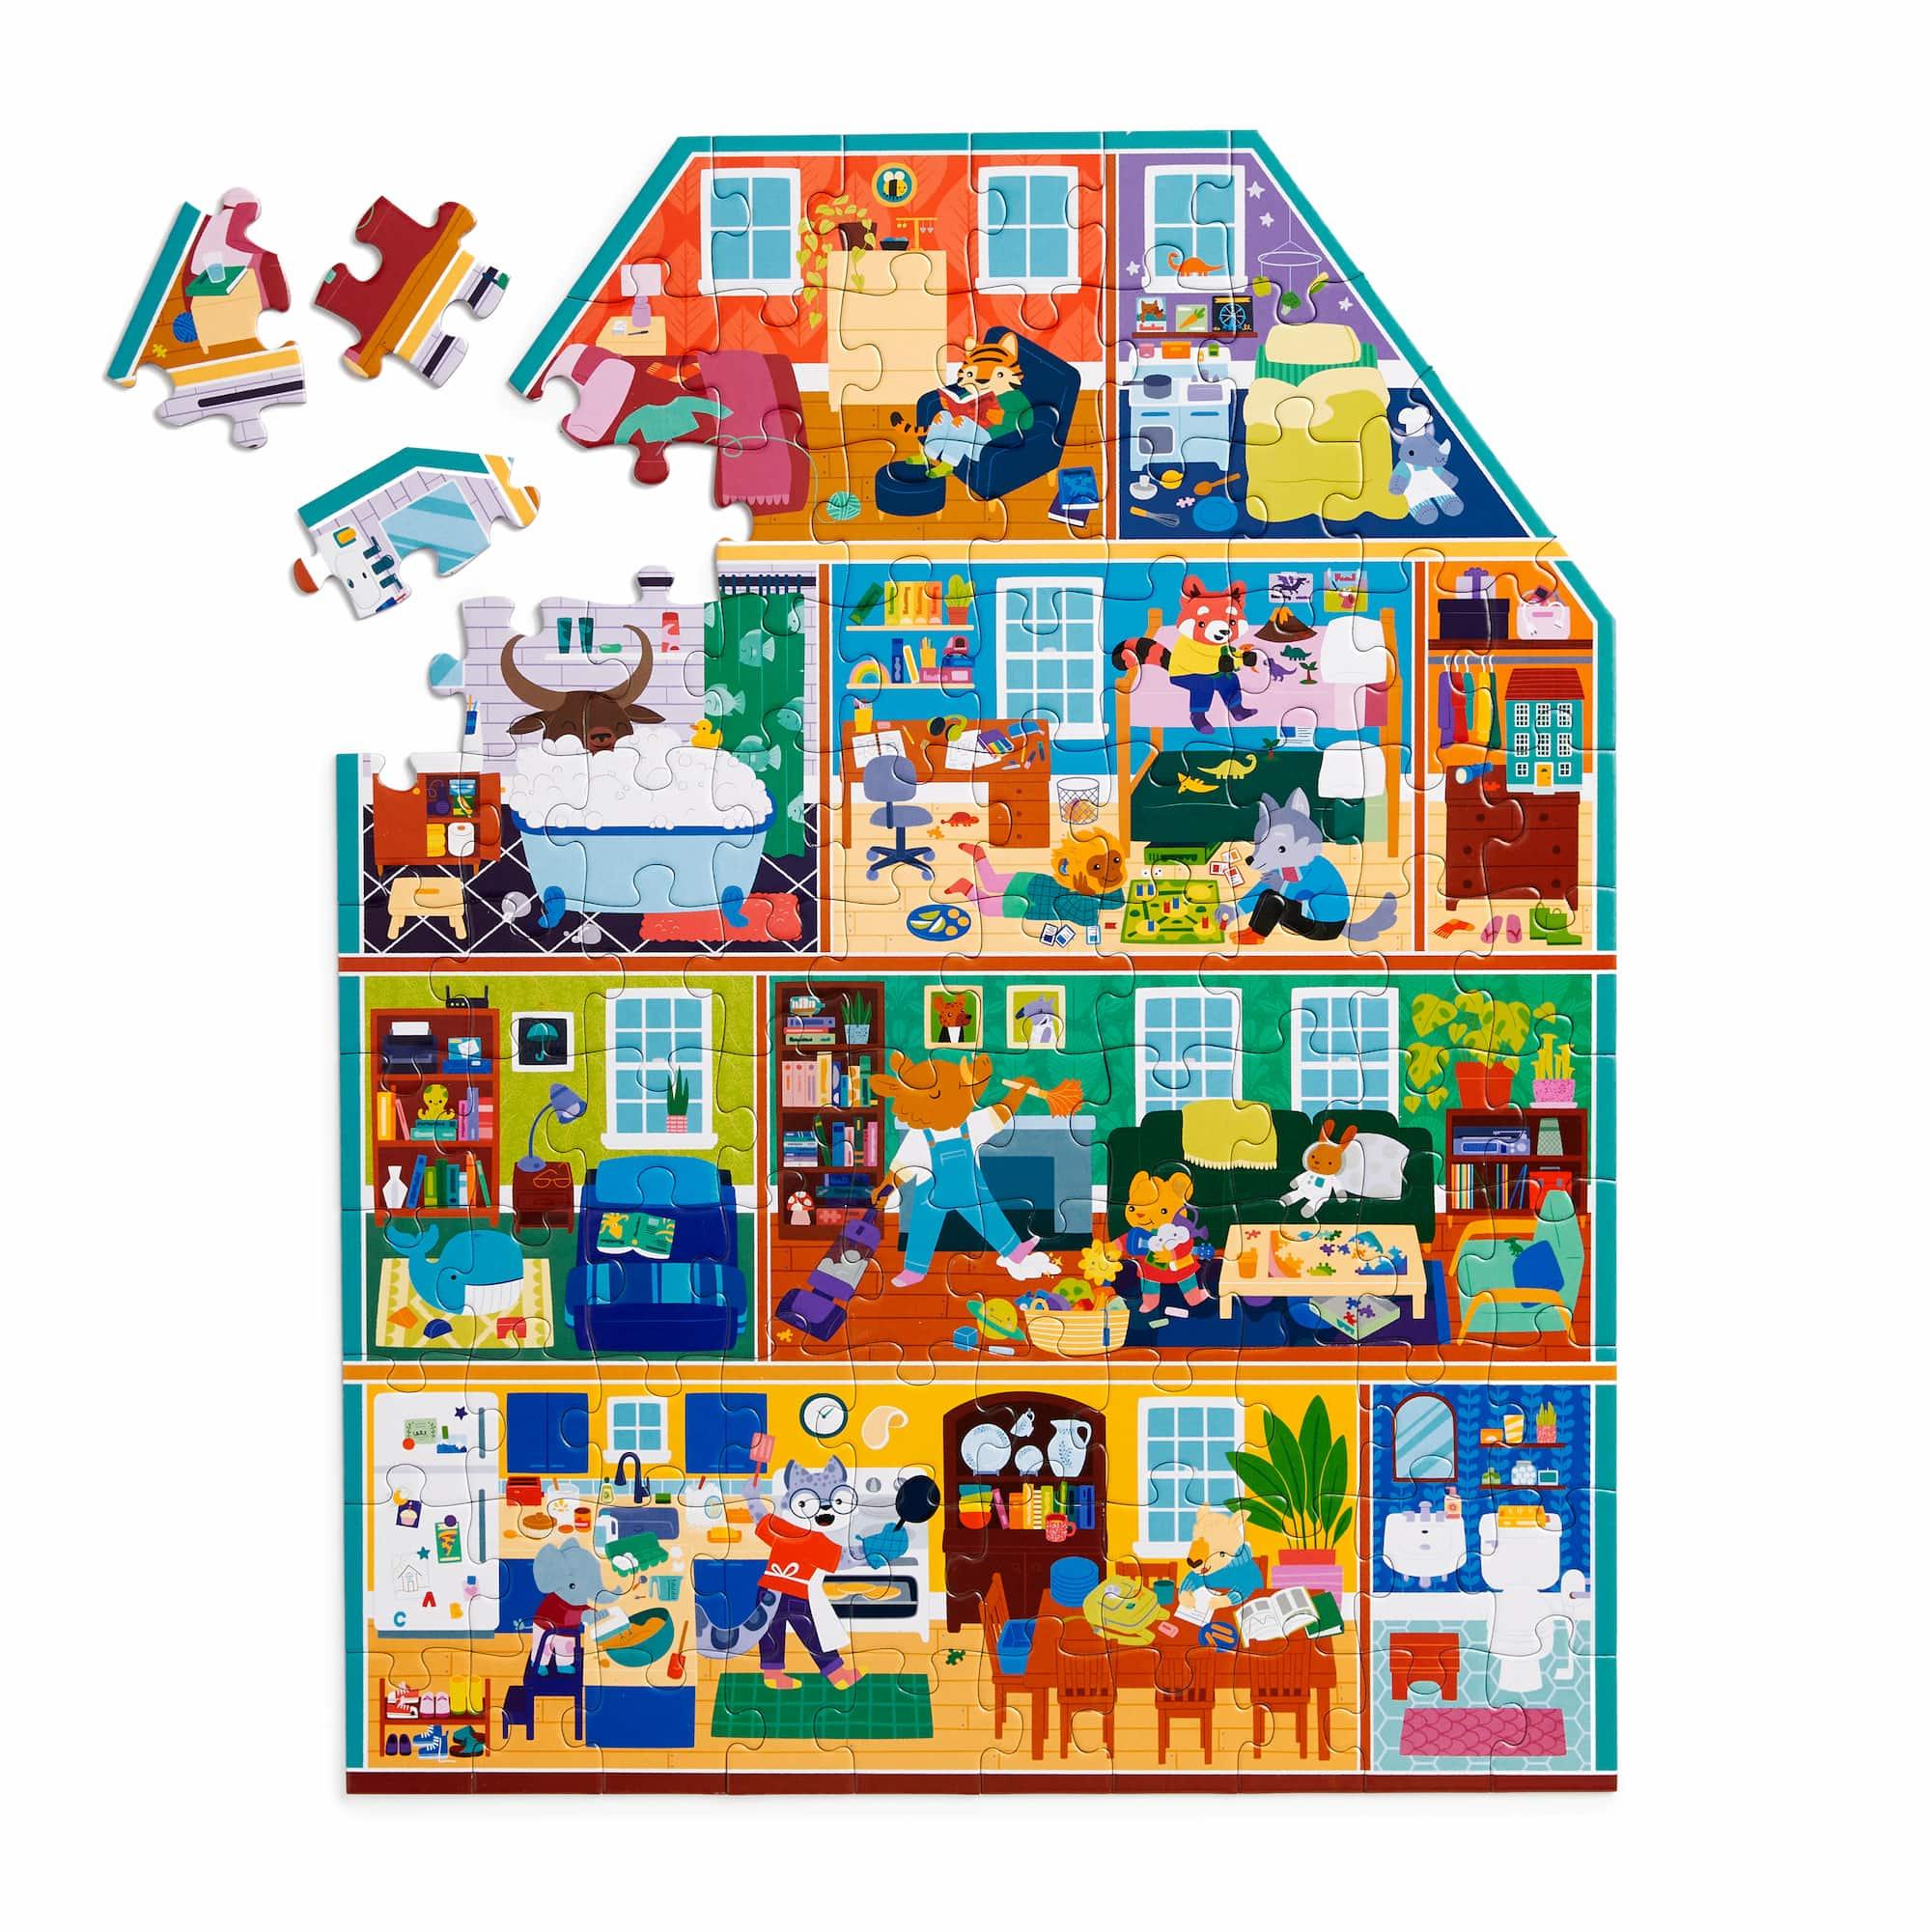 Mudpuppy: puzzle mój dom My House My Home - Noski Noski